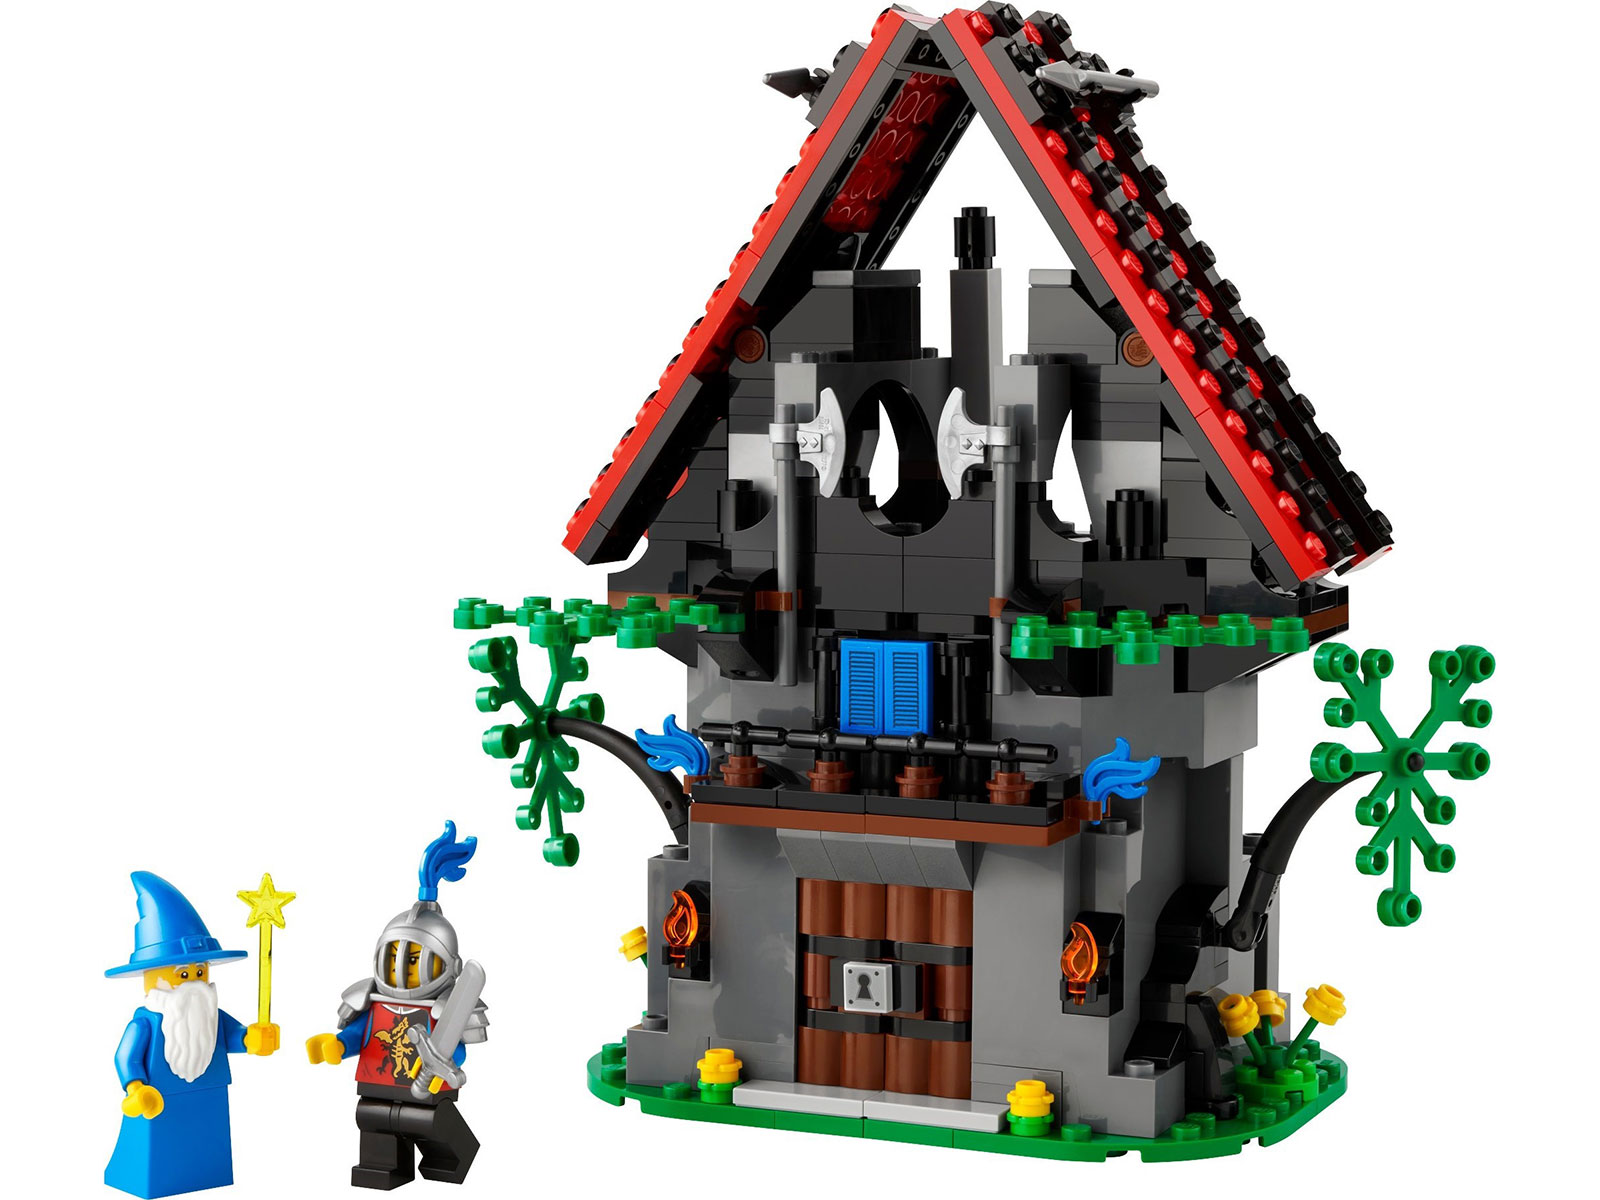 LEGO® 40601 - Majistos Zauberwerkstatt